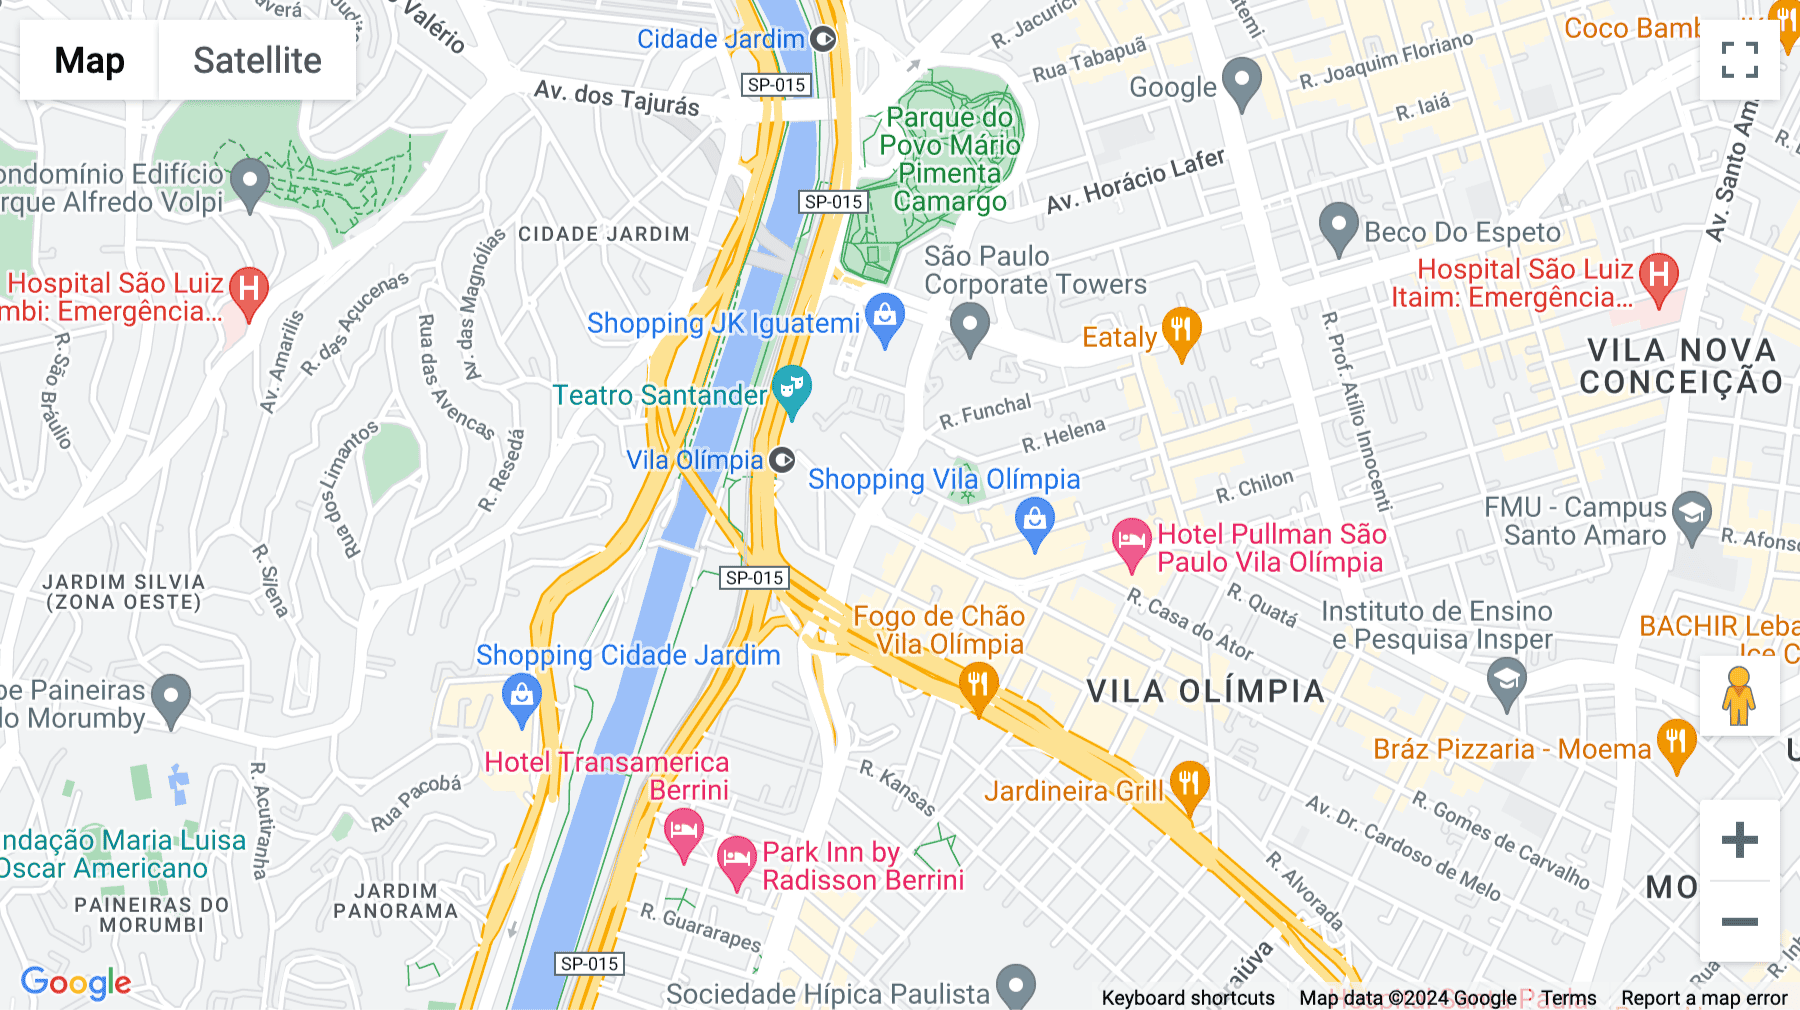 Click for interative map of Rua Funchal 411, Sao Paulo